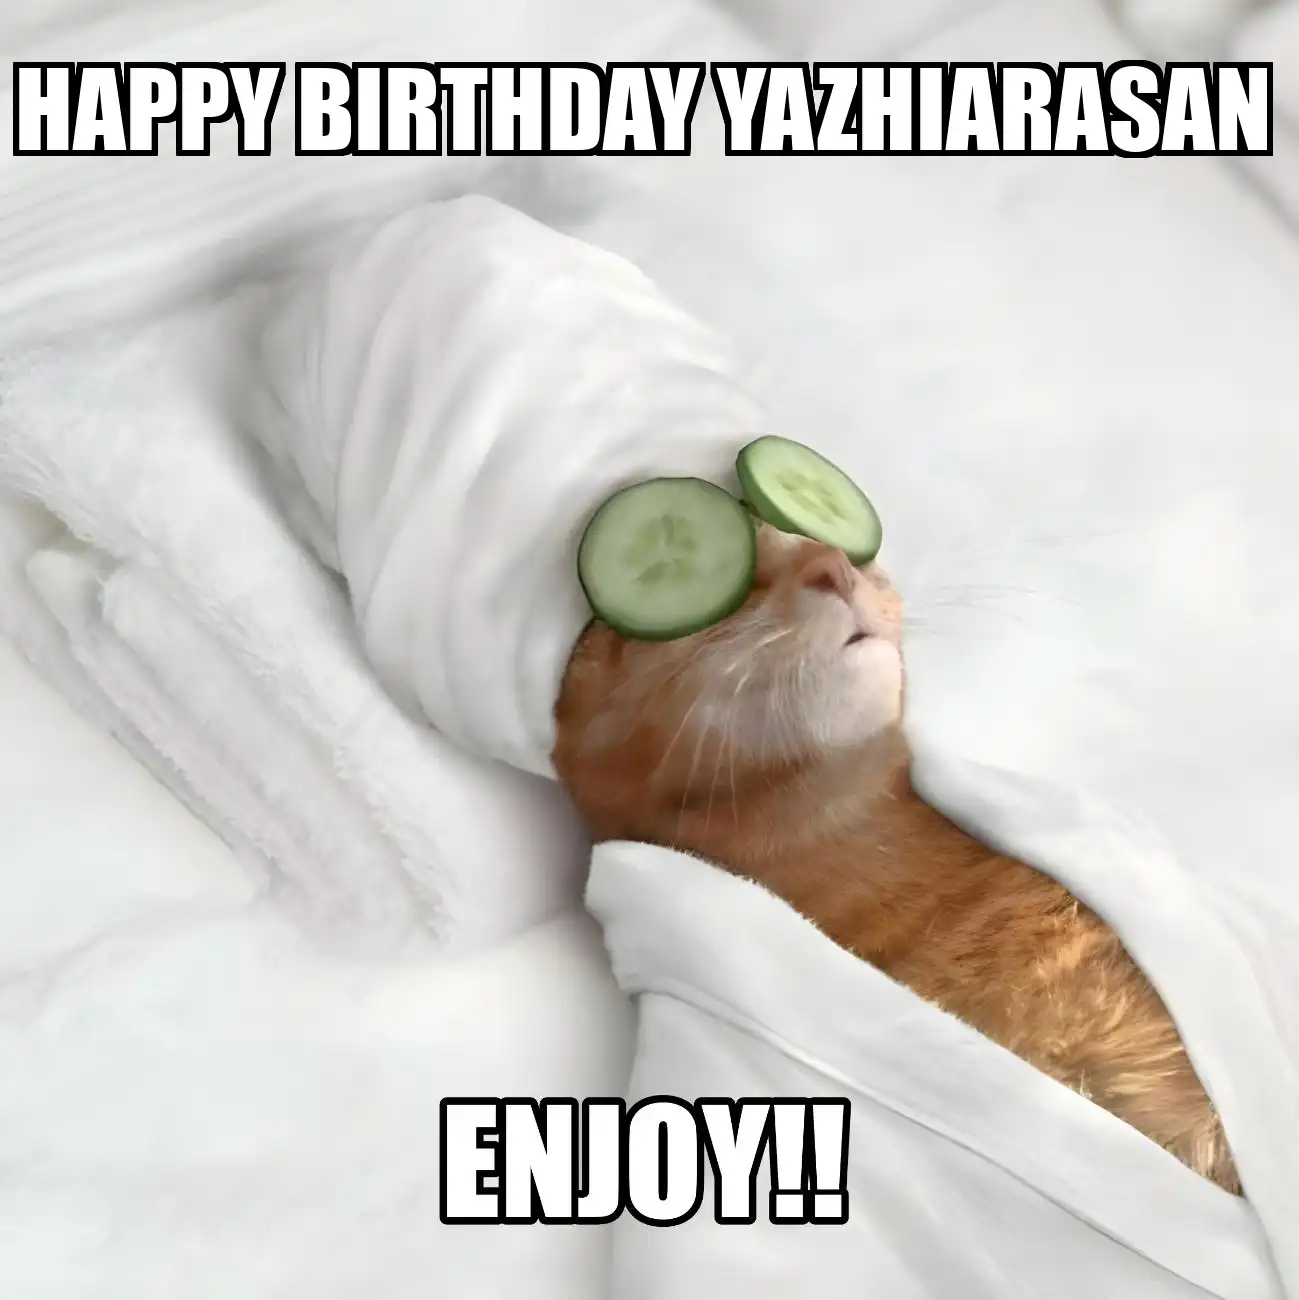 Happy Birthday Yazhiarasan Enjoy Cat Meme